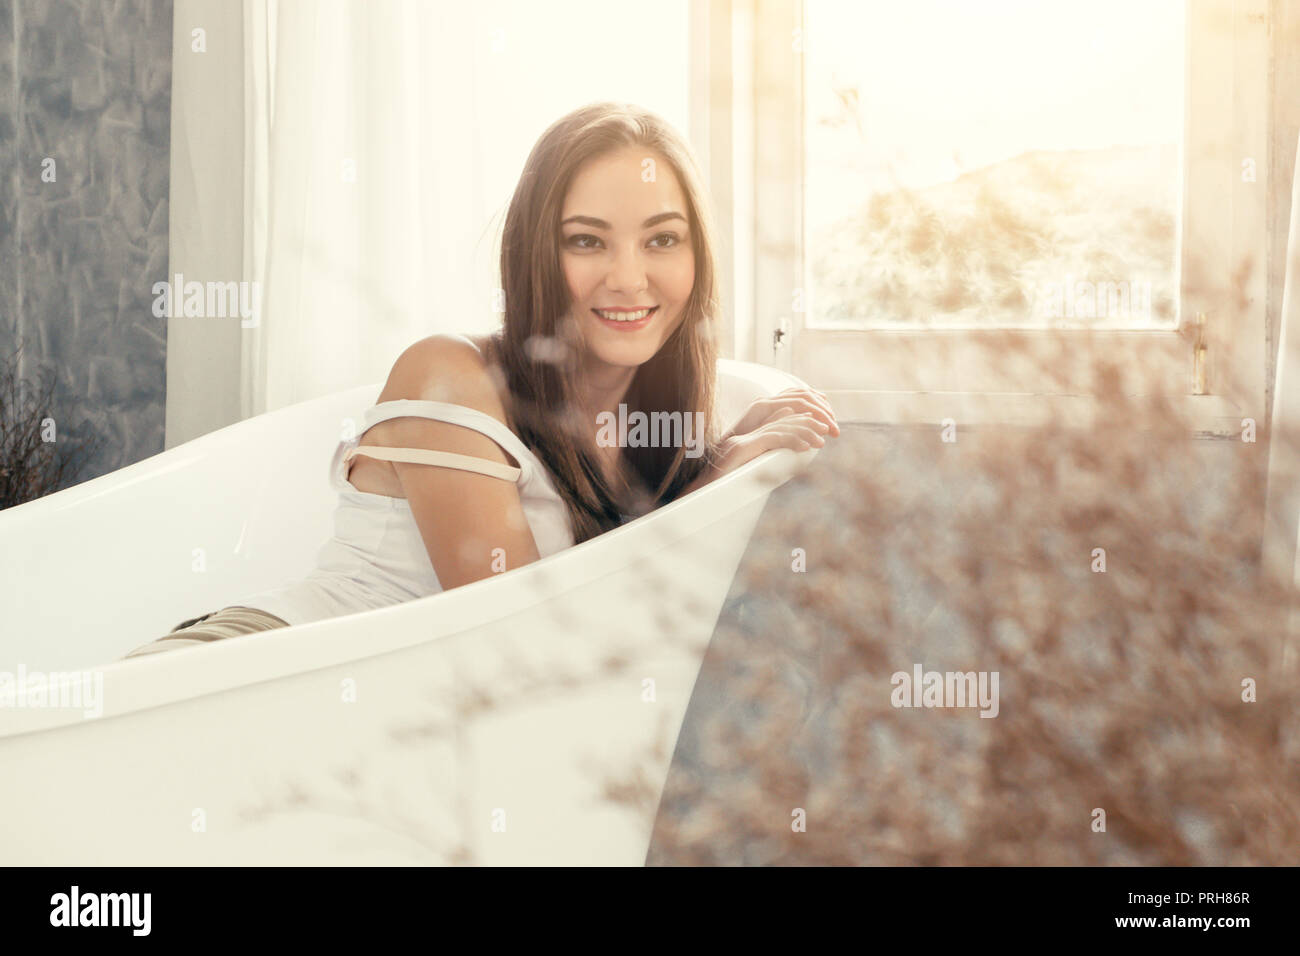 cute teen woman smiling waiting in the bathtub bathroom Stock Photo